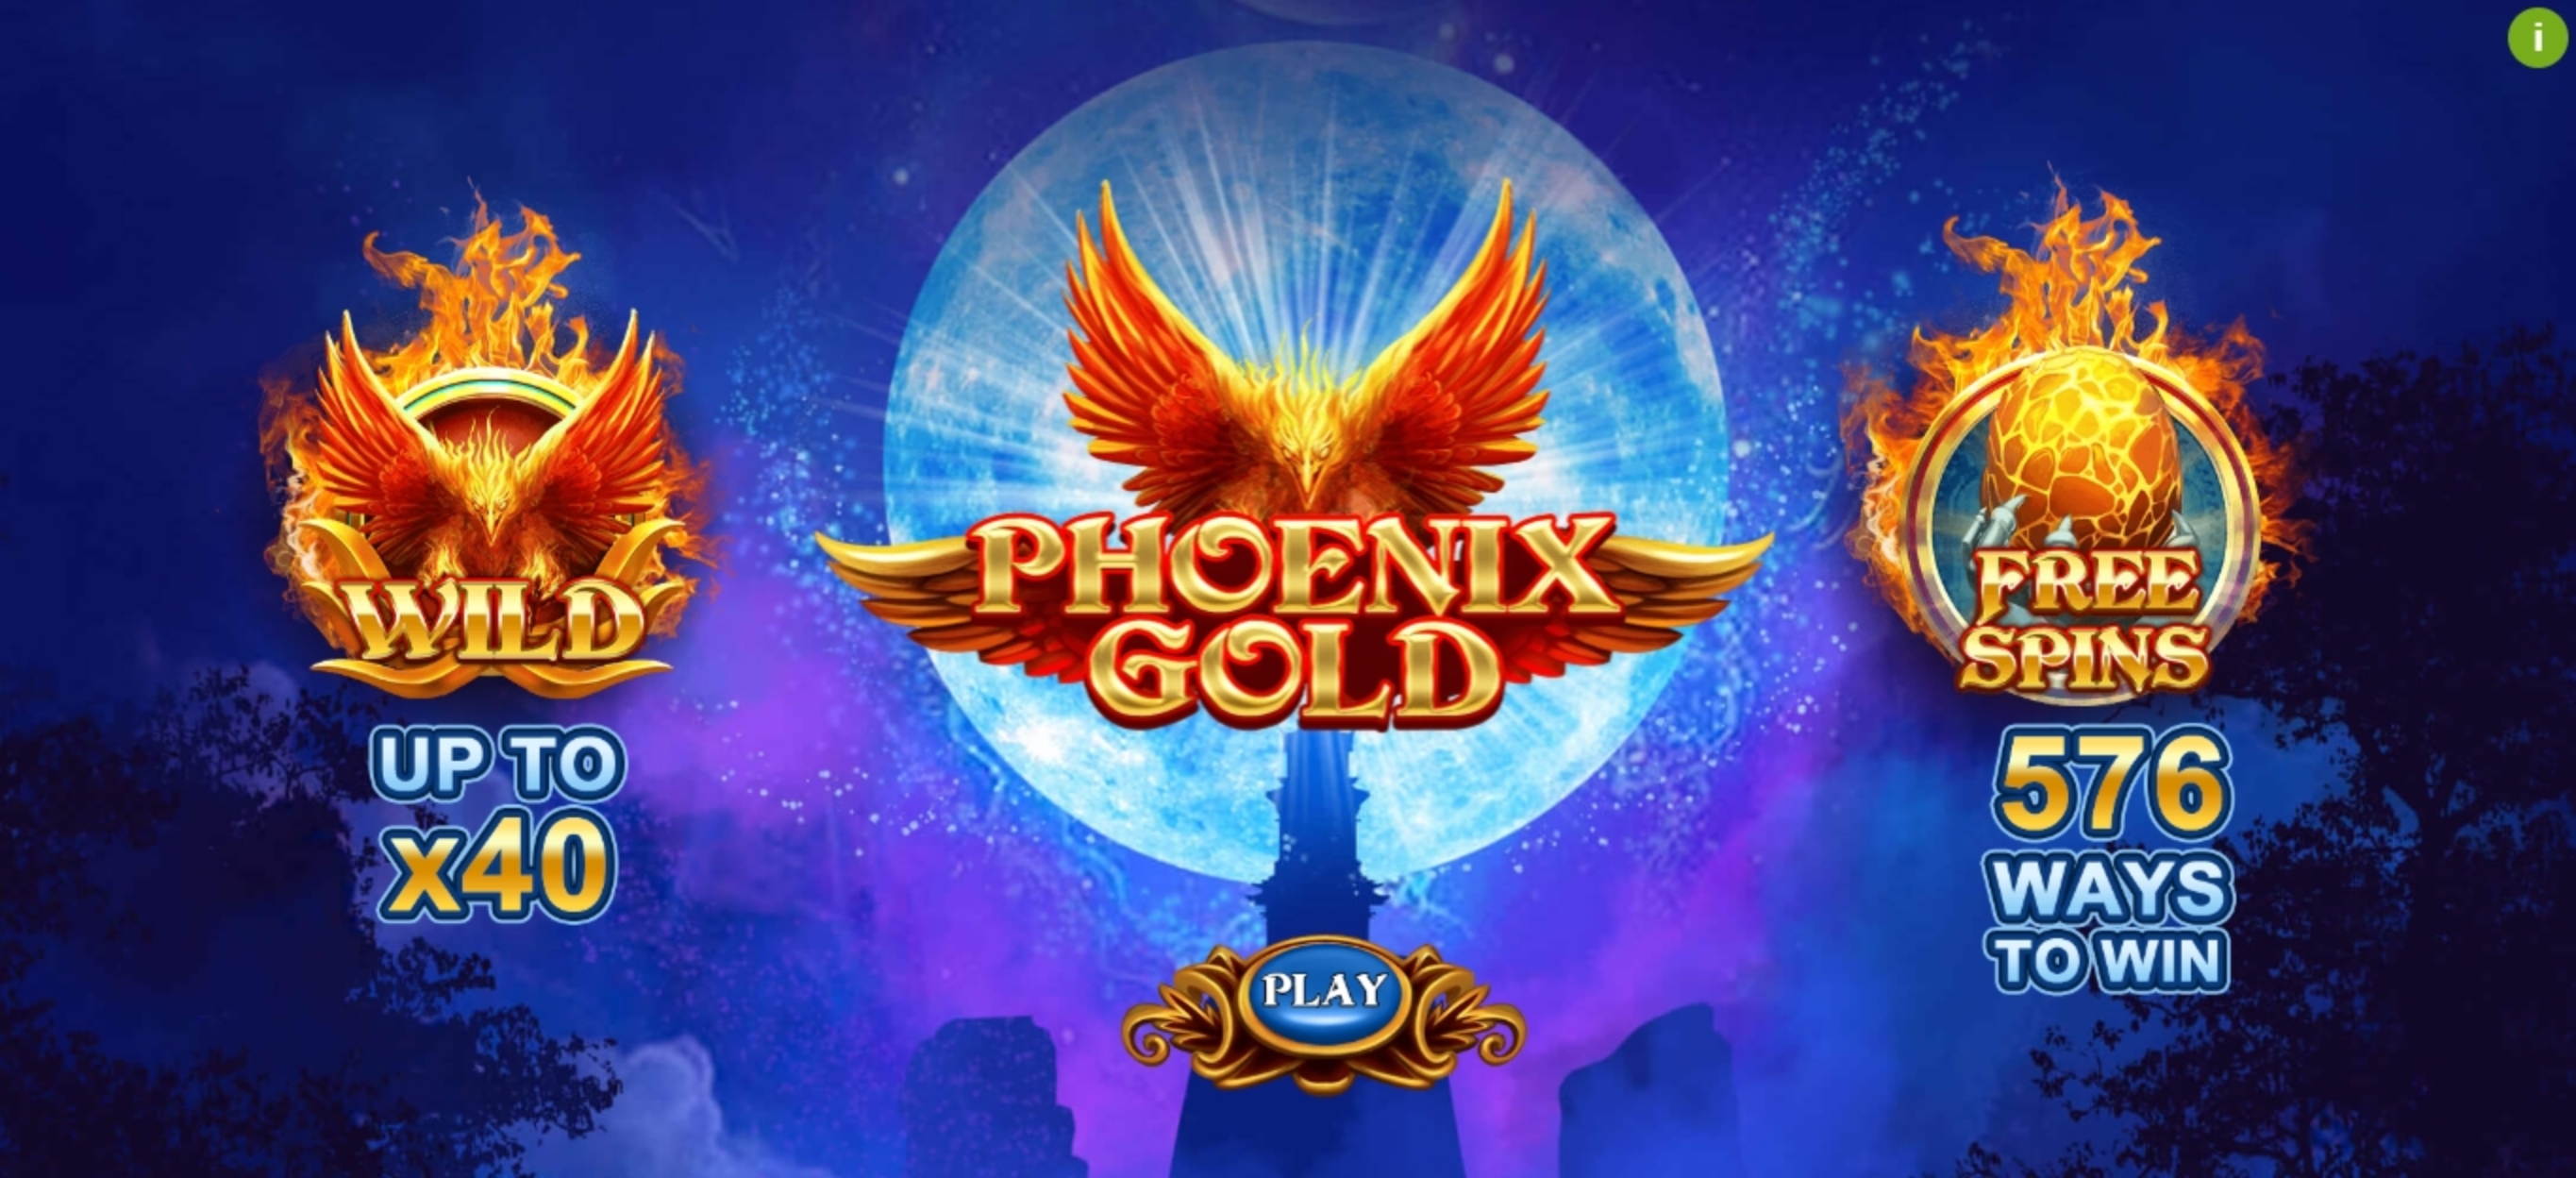 Play Phoenix Gold Free Casino Slot Game by PariPlay